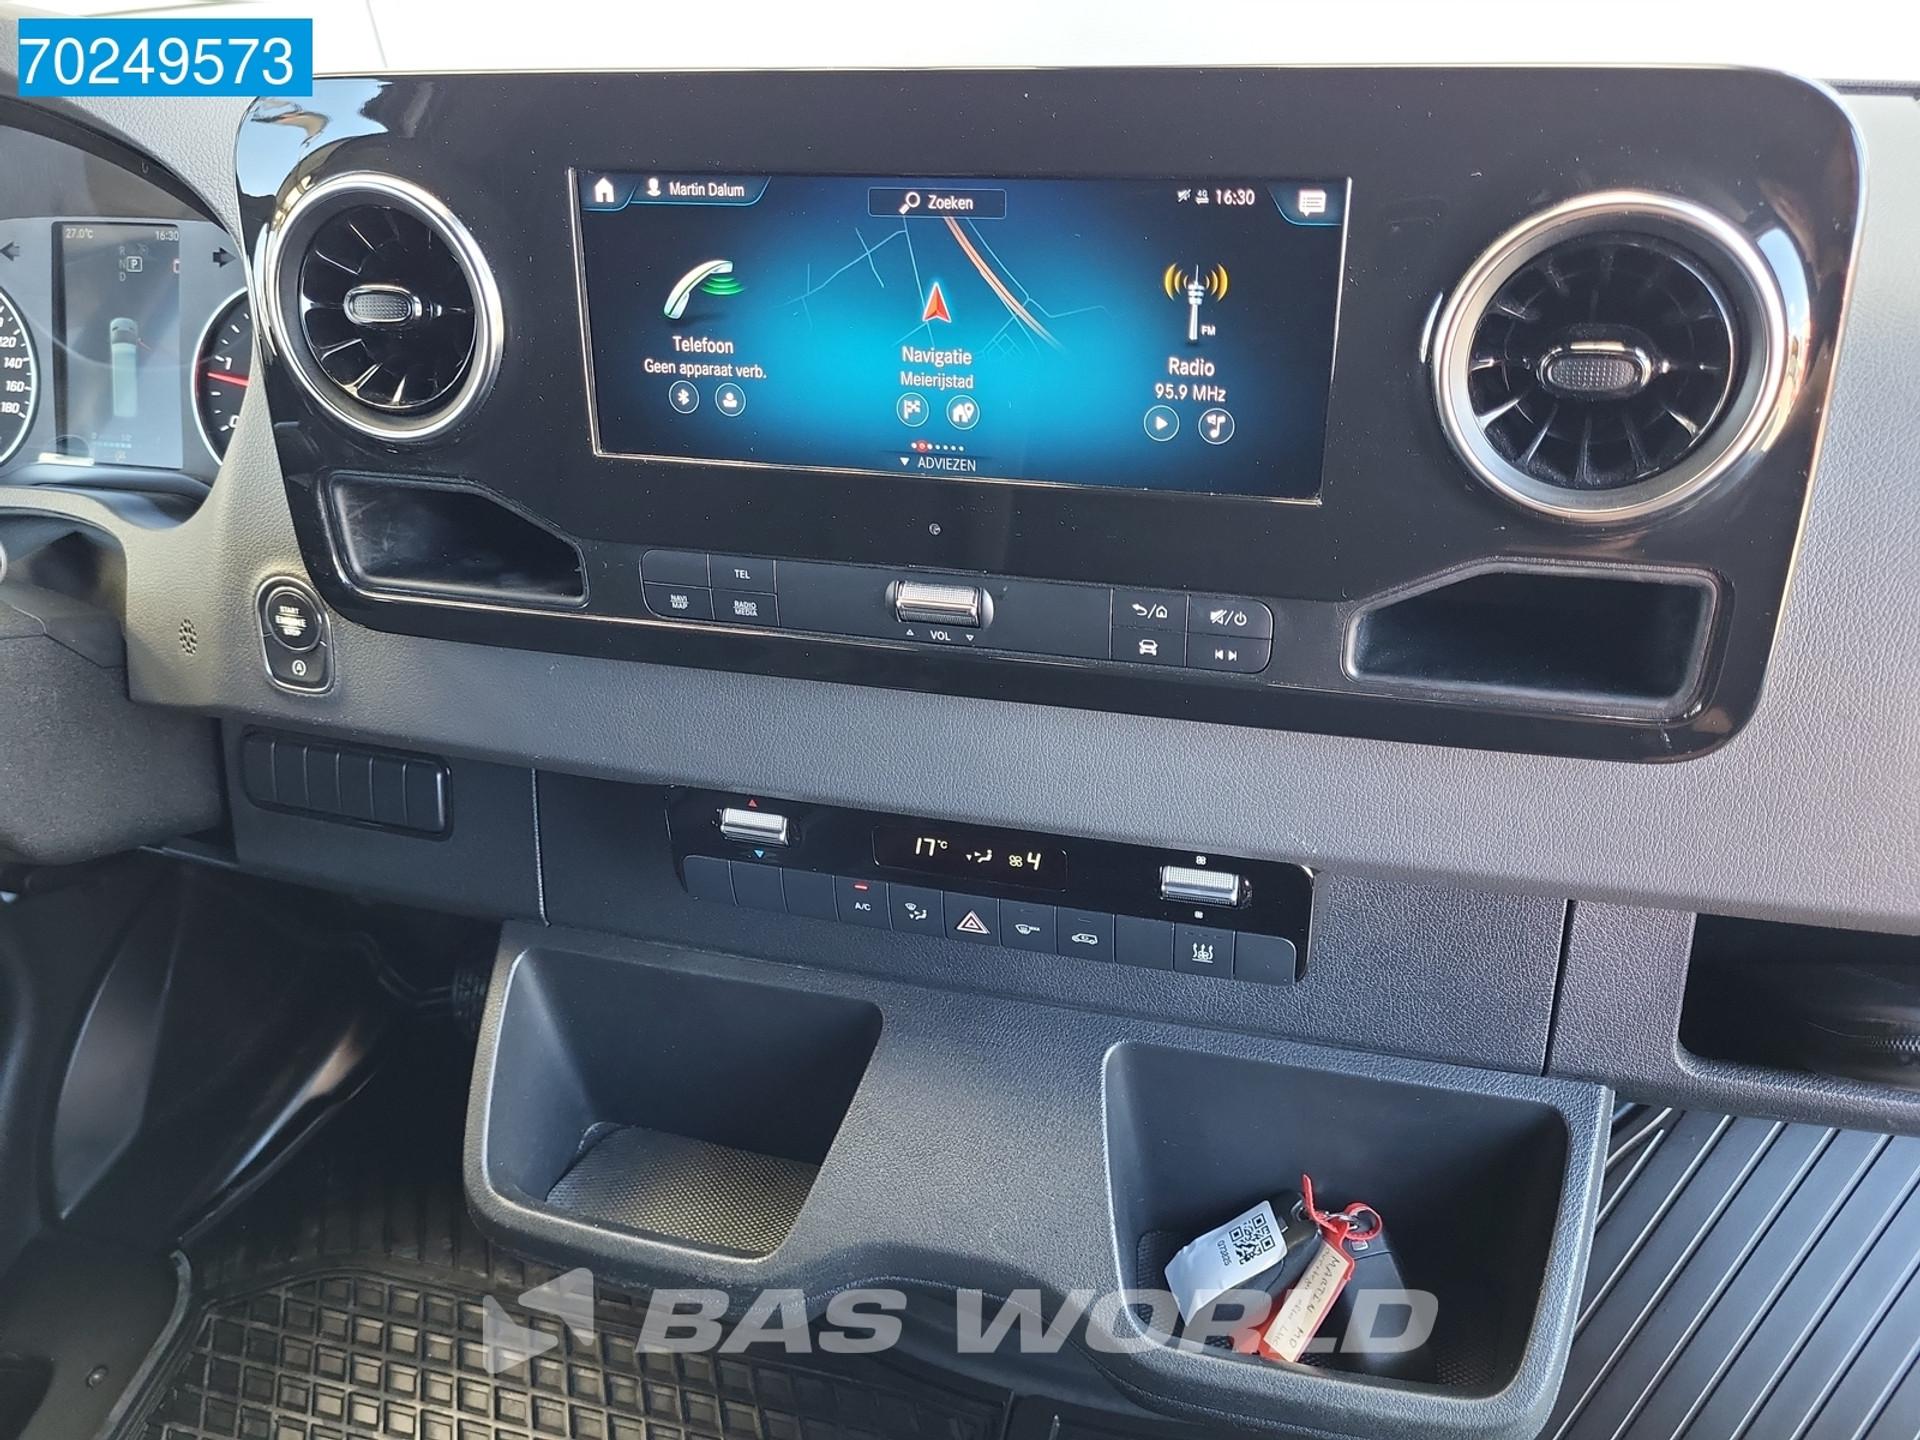 Foto 9 van Mercedes-Benz 214 CDI Automaat L1H1 Airco Cruise Groot scherm Navi Standkachel 7m3 Airco Cruise control